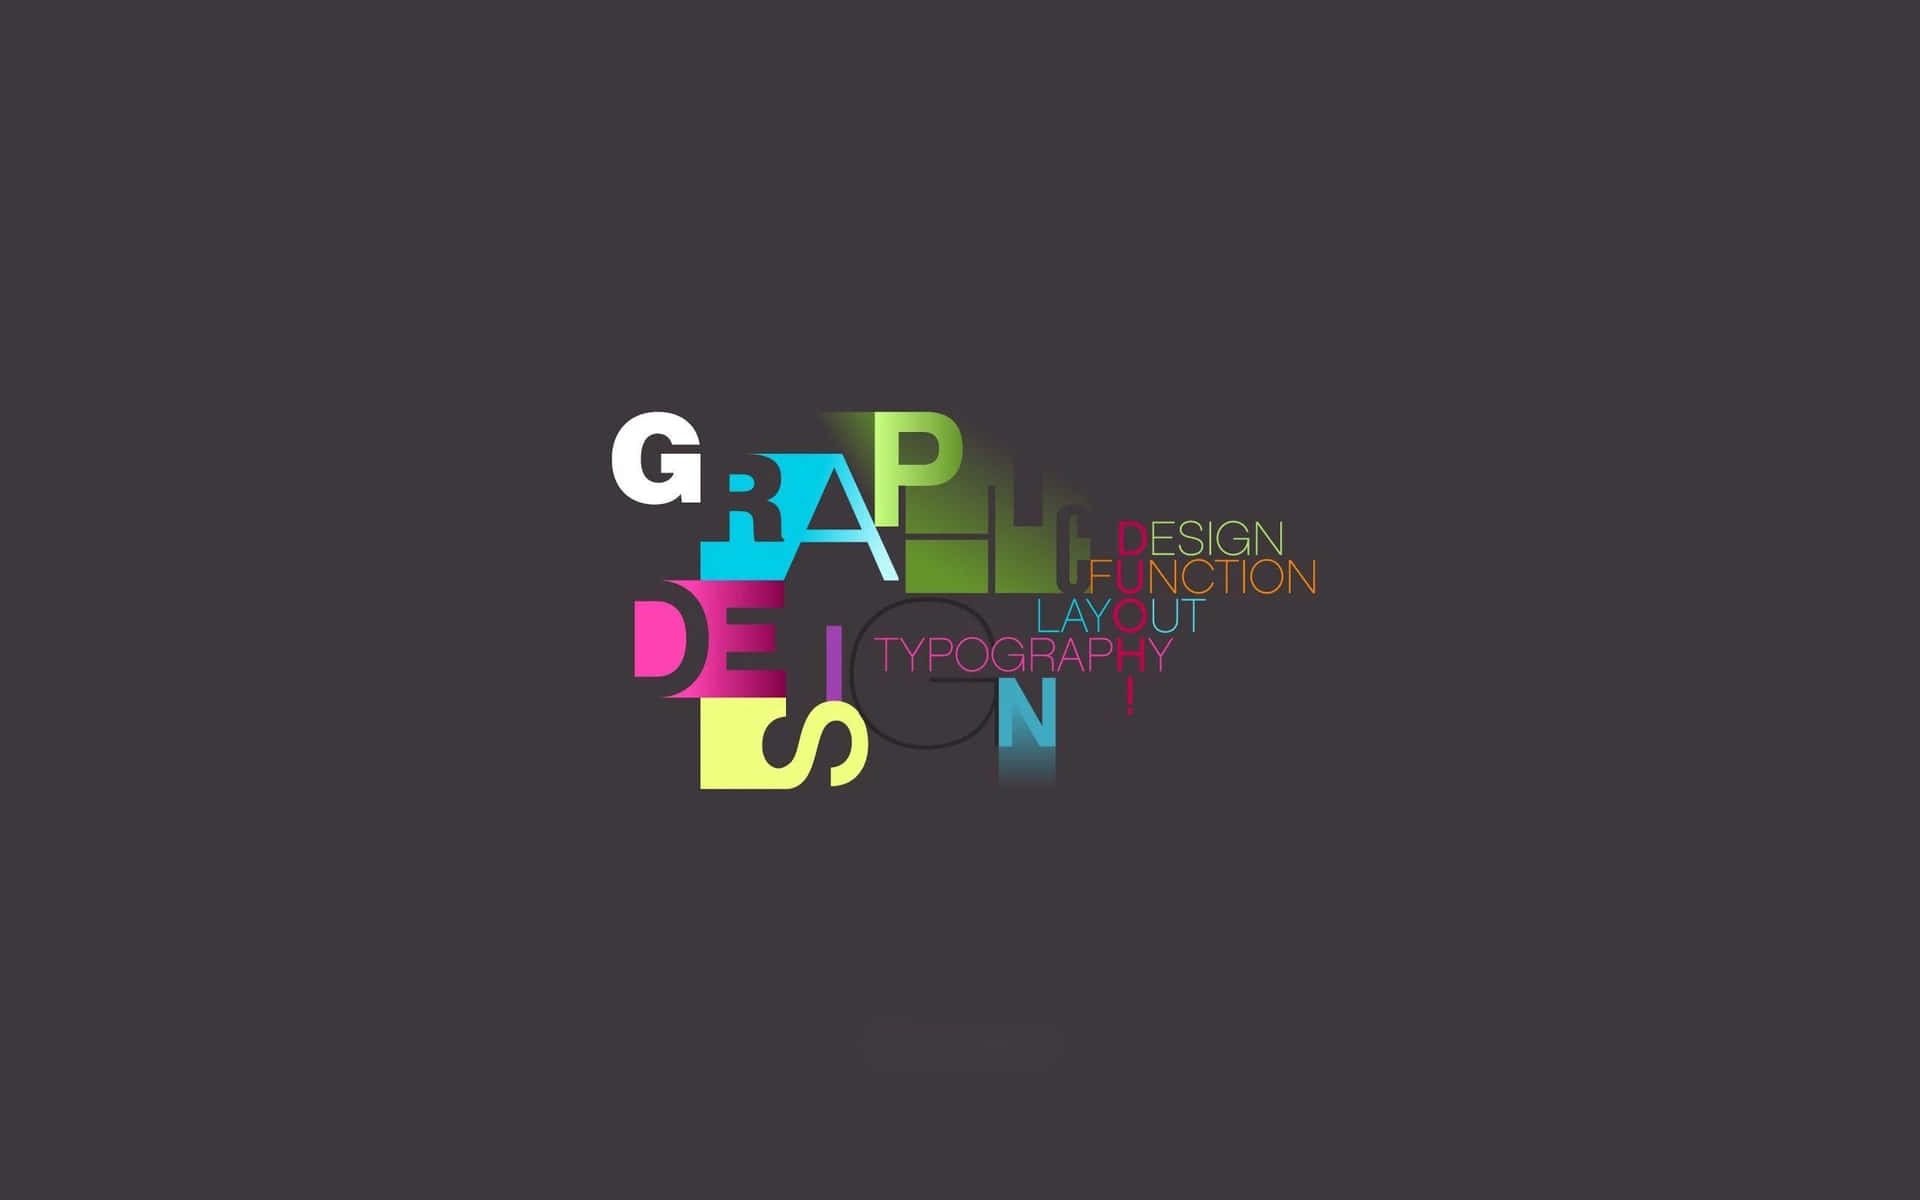 Grafiskdesign Logo Hd Wallpapers.